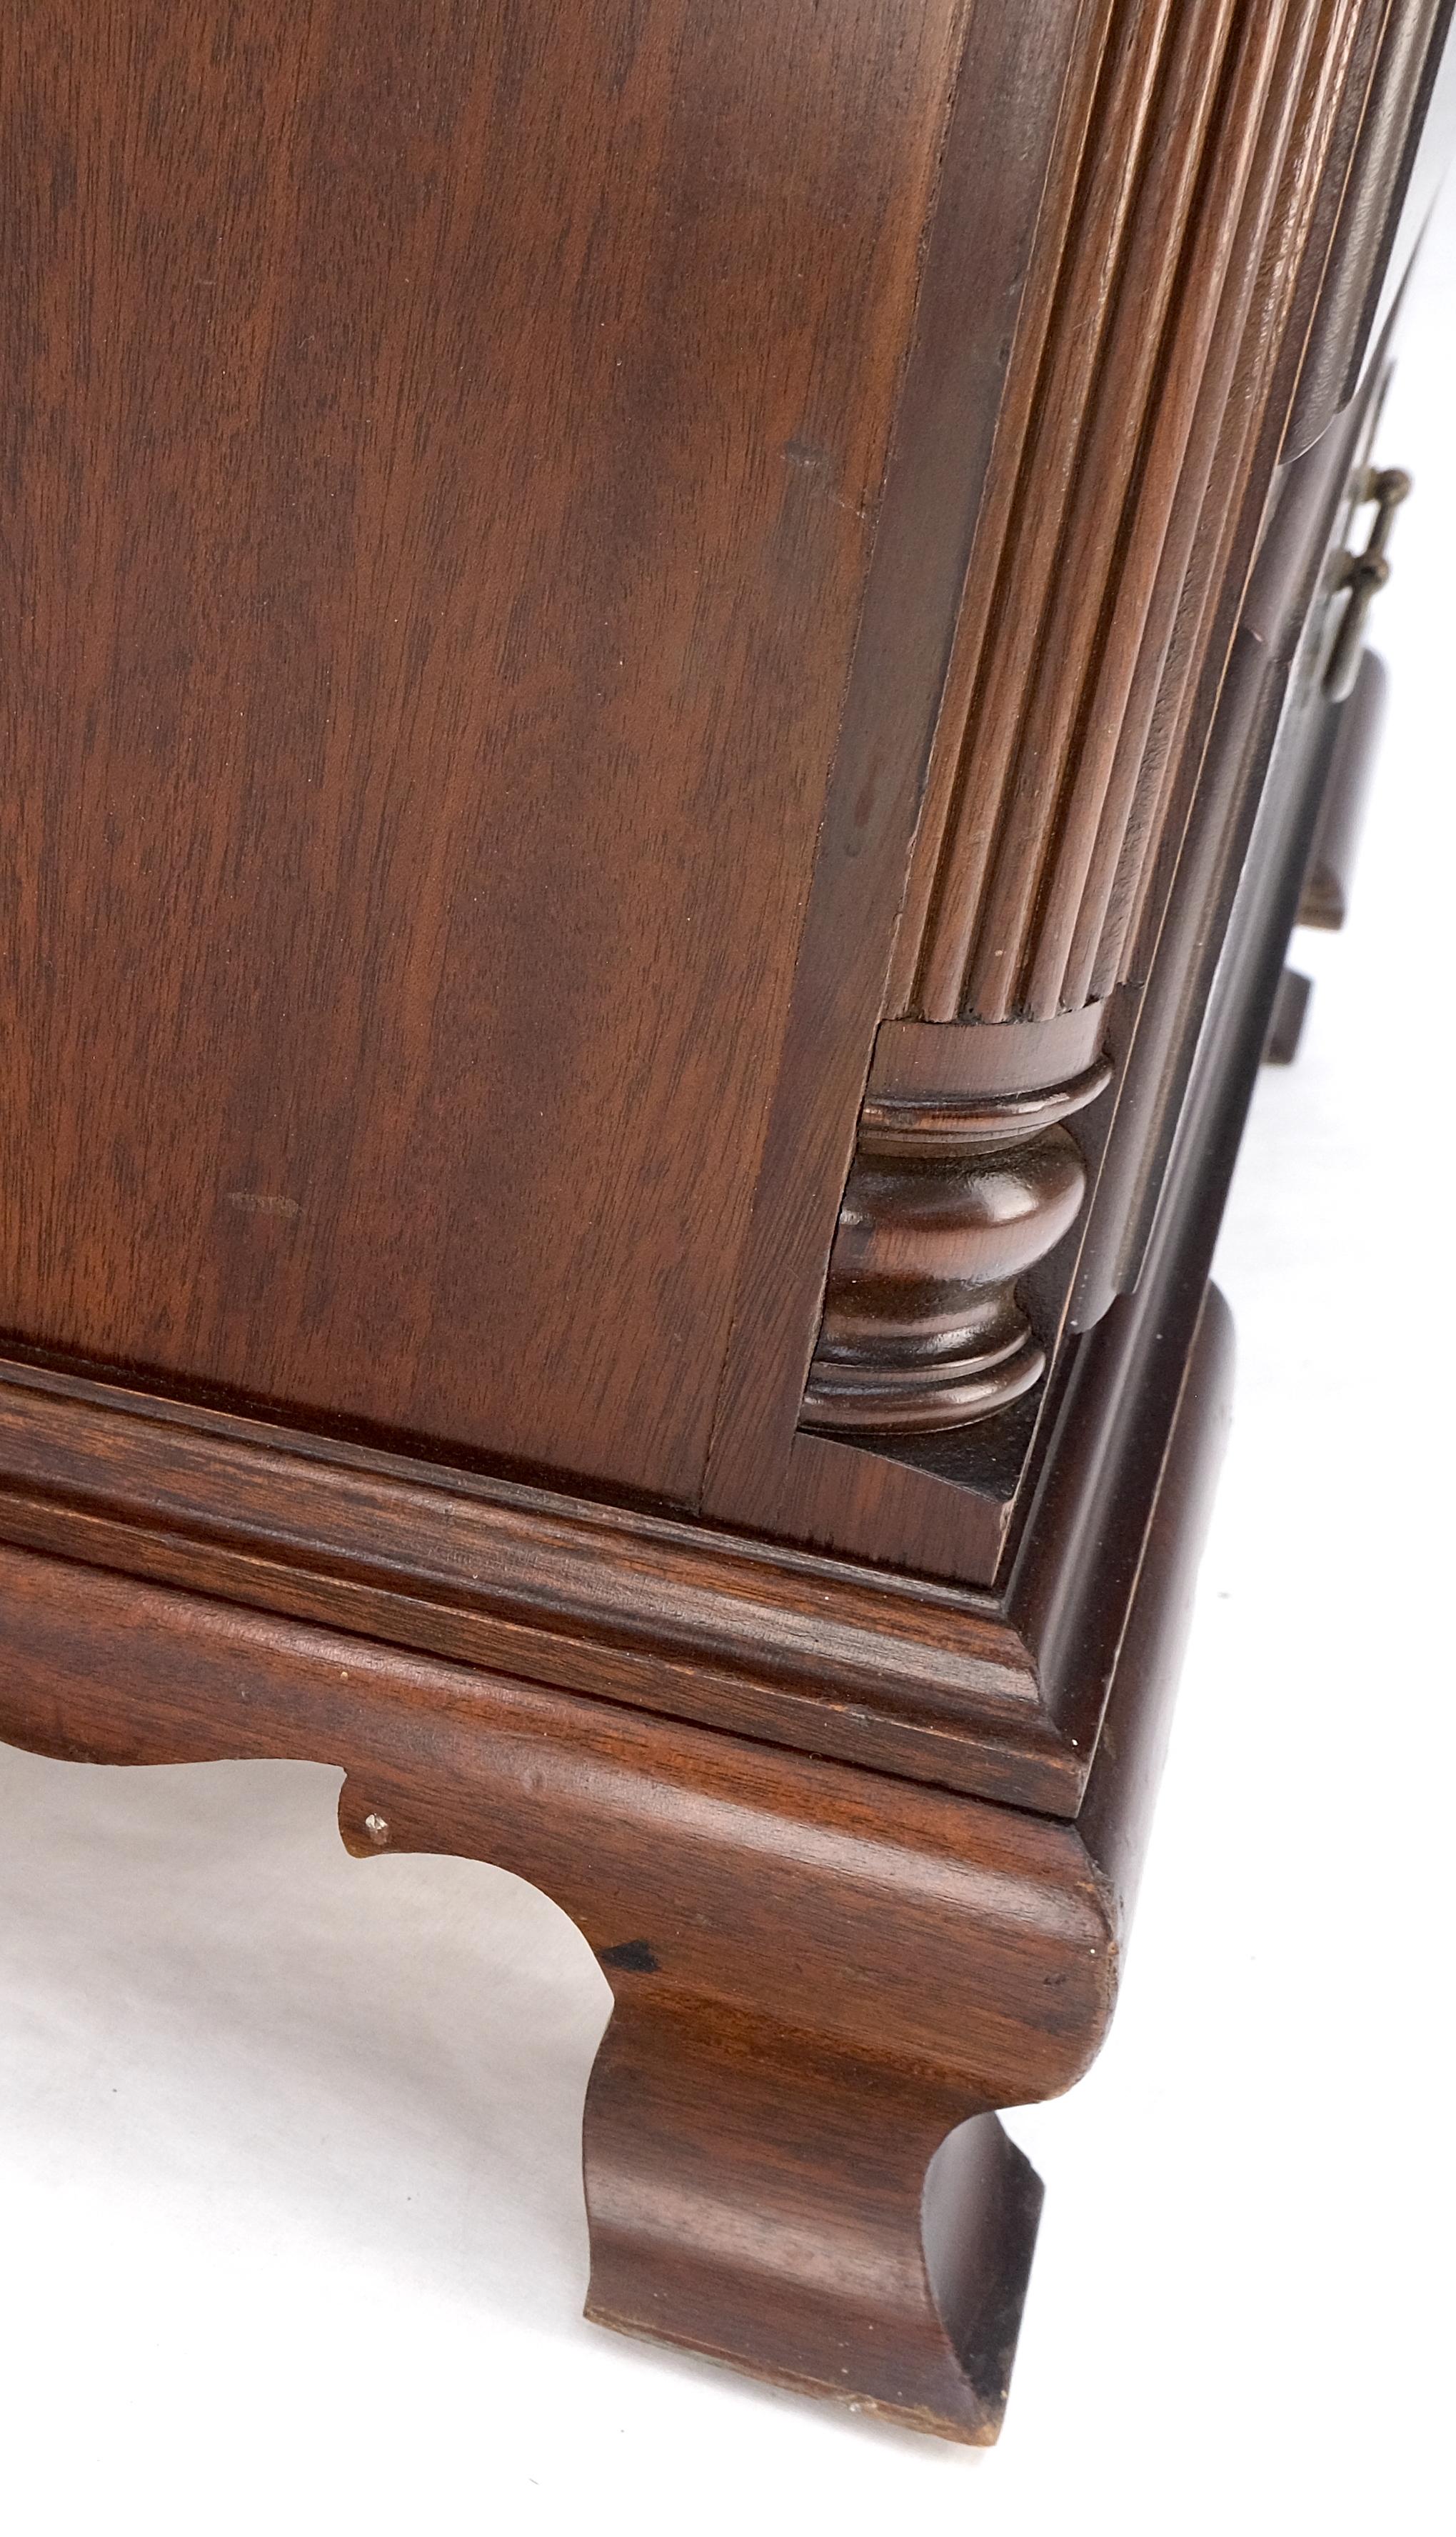 American Bracket Feet Mahogany 6 Drawers Brass Pulls Tall Lingerie Chest Dresser Cabinet For Sale